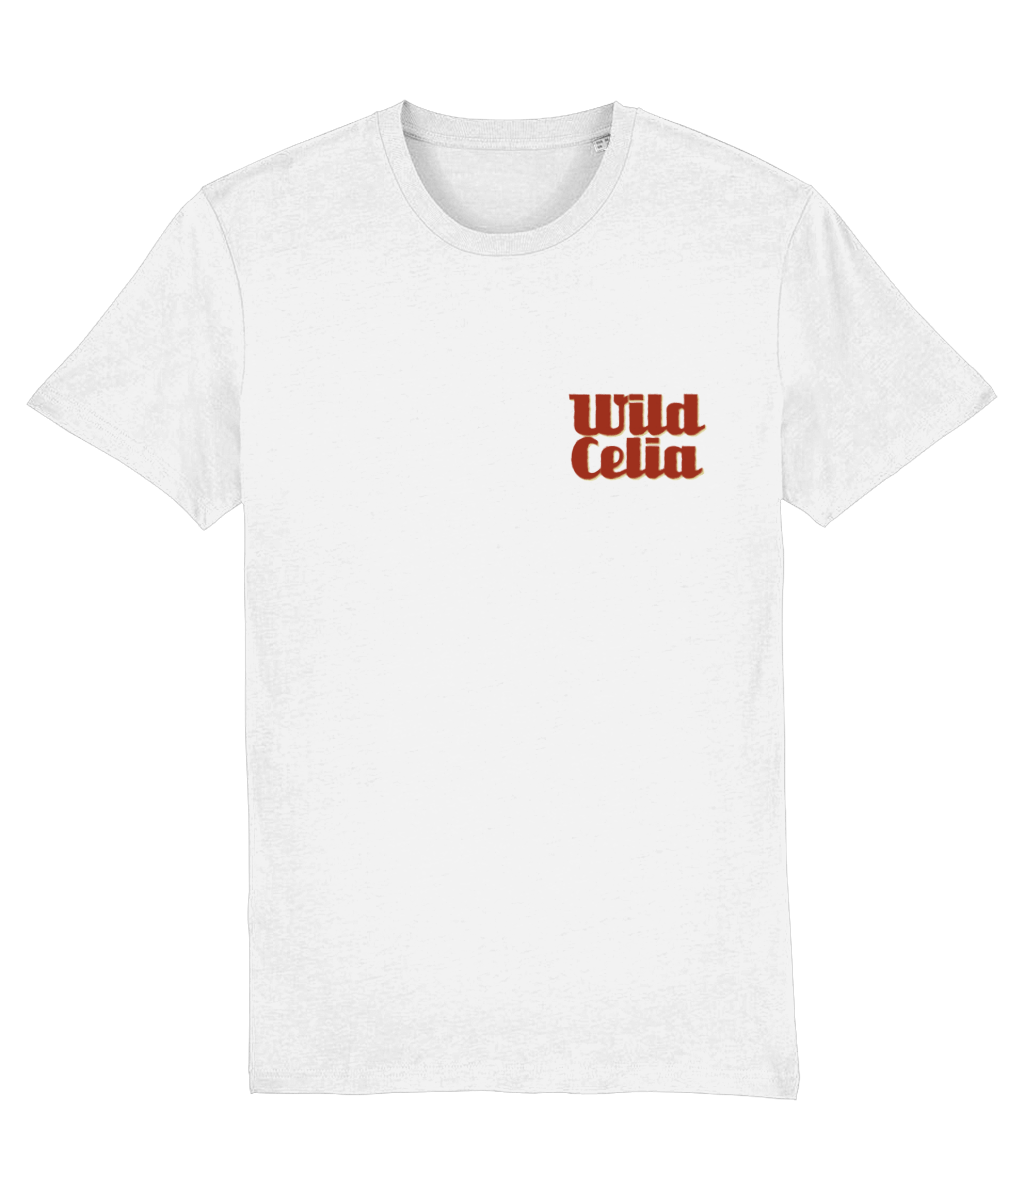 Wild Celia T-shirt